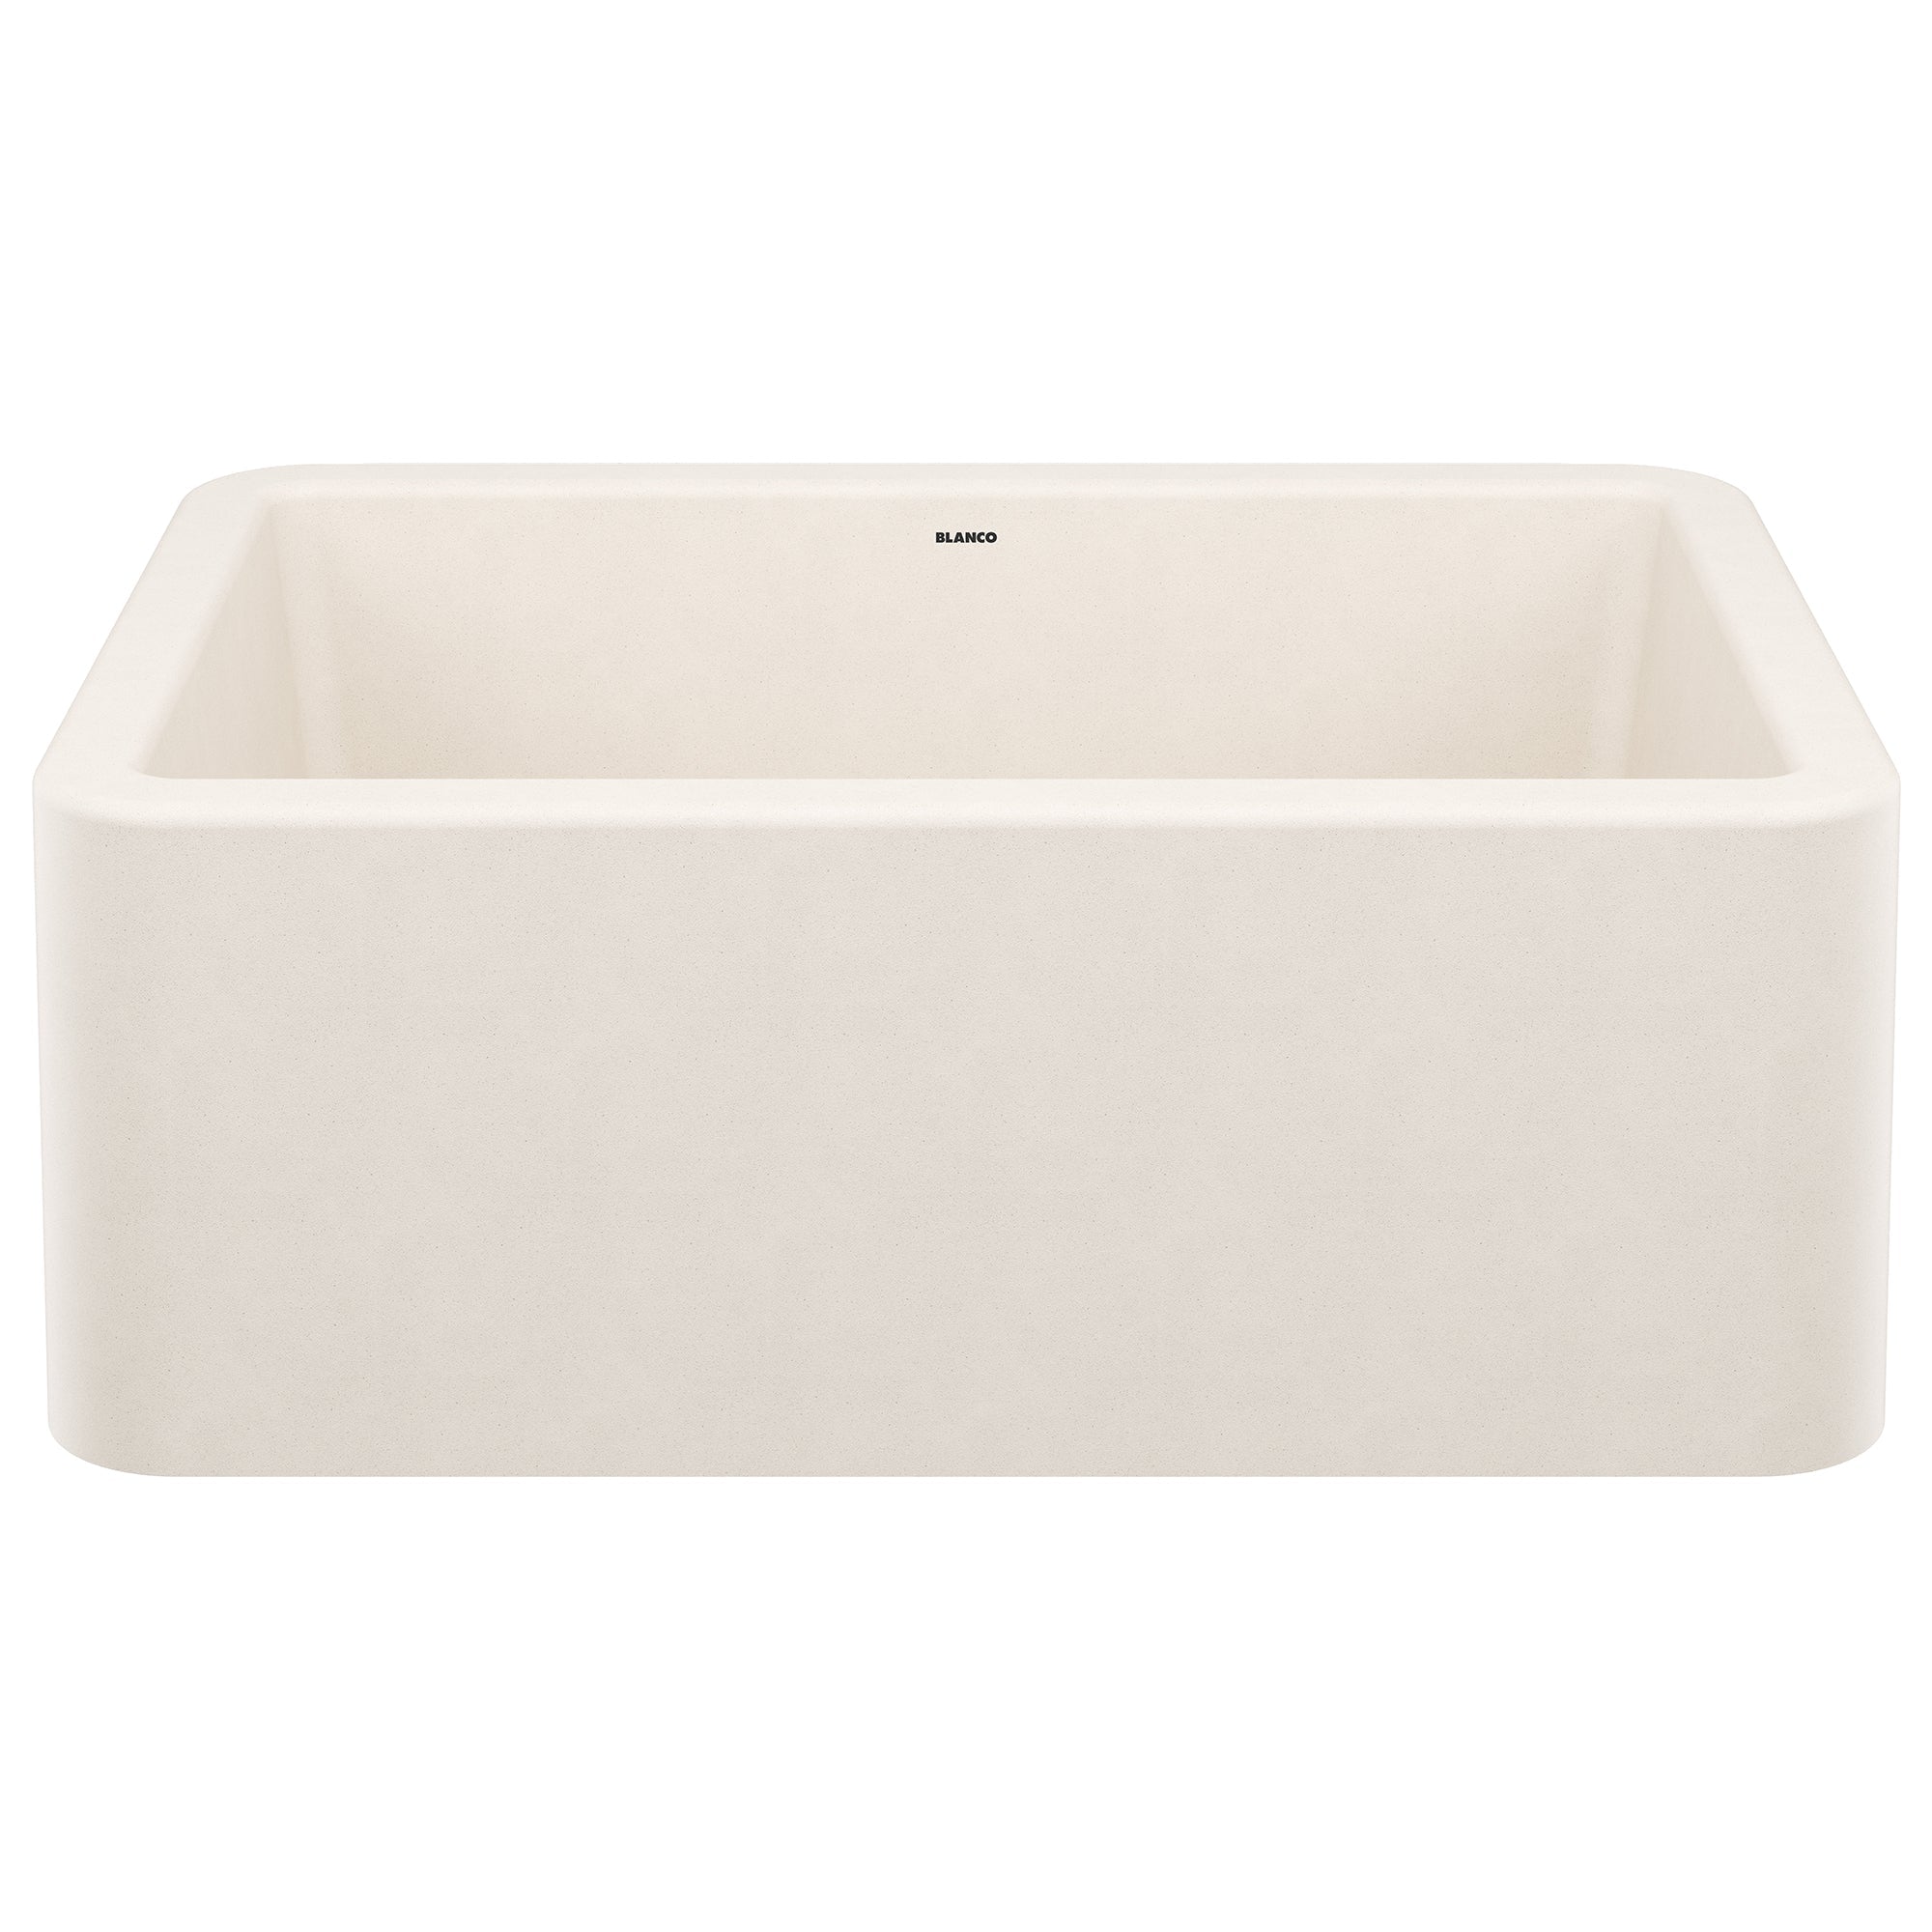 BLANCO Ikon 27" SILGRANIT Single Bowl Farmhouse Sink in Soft White